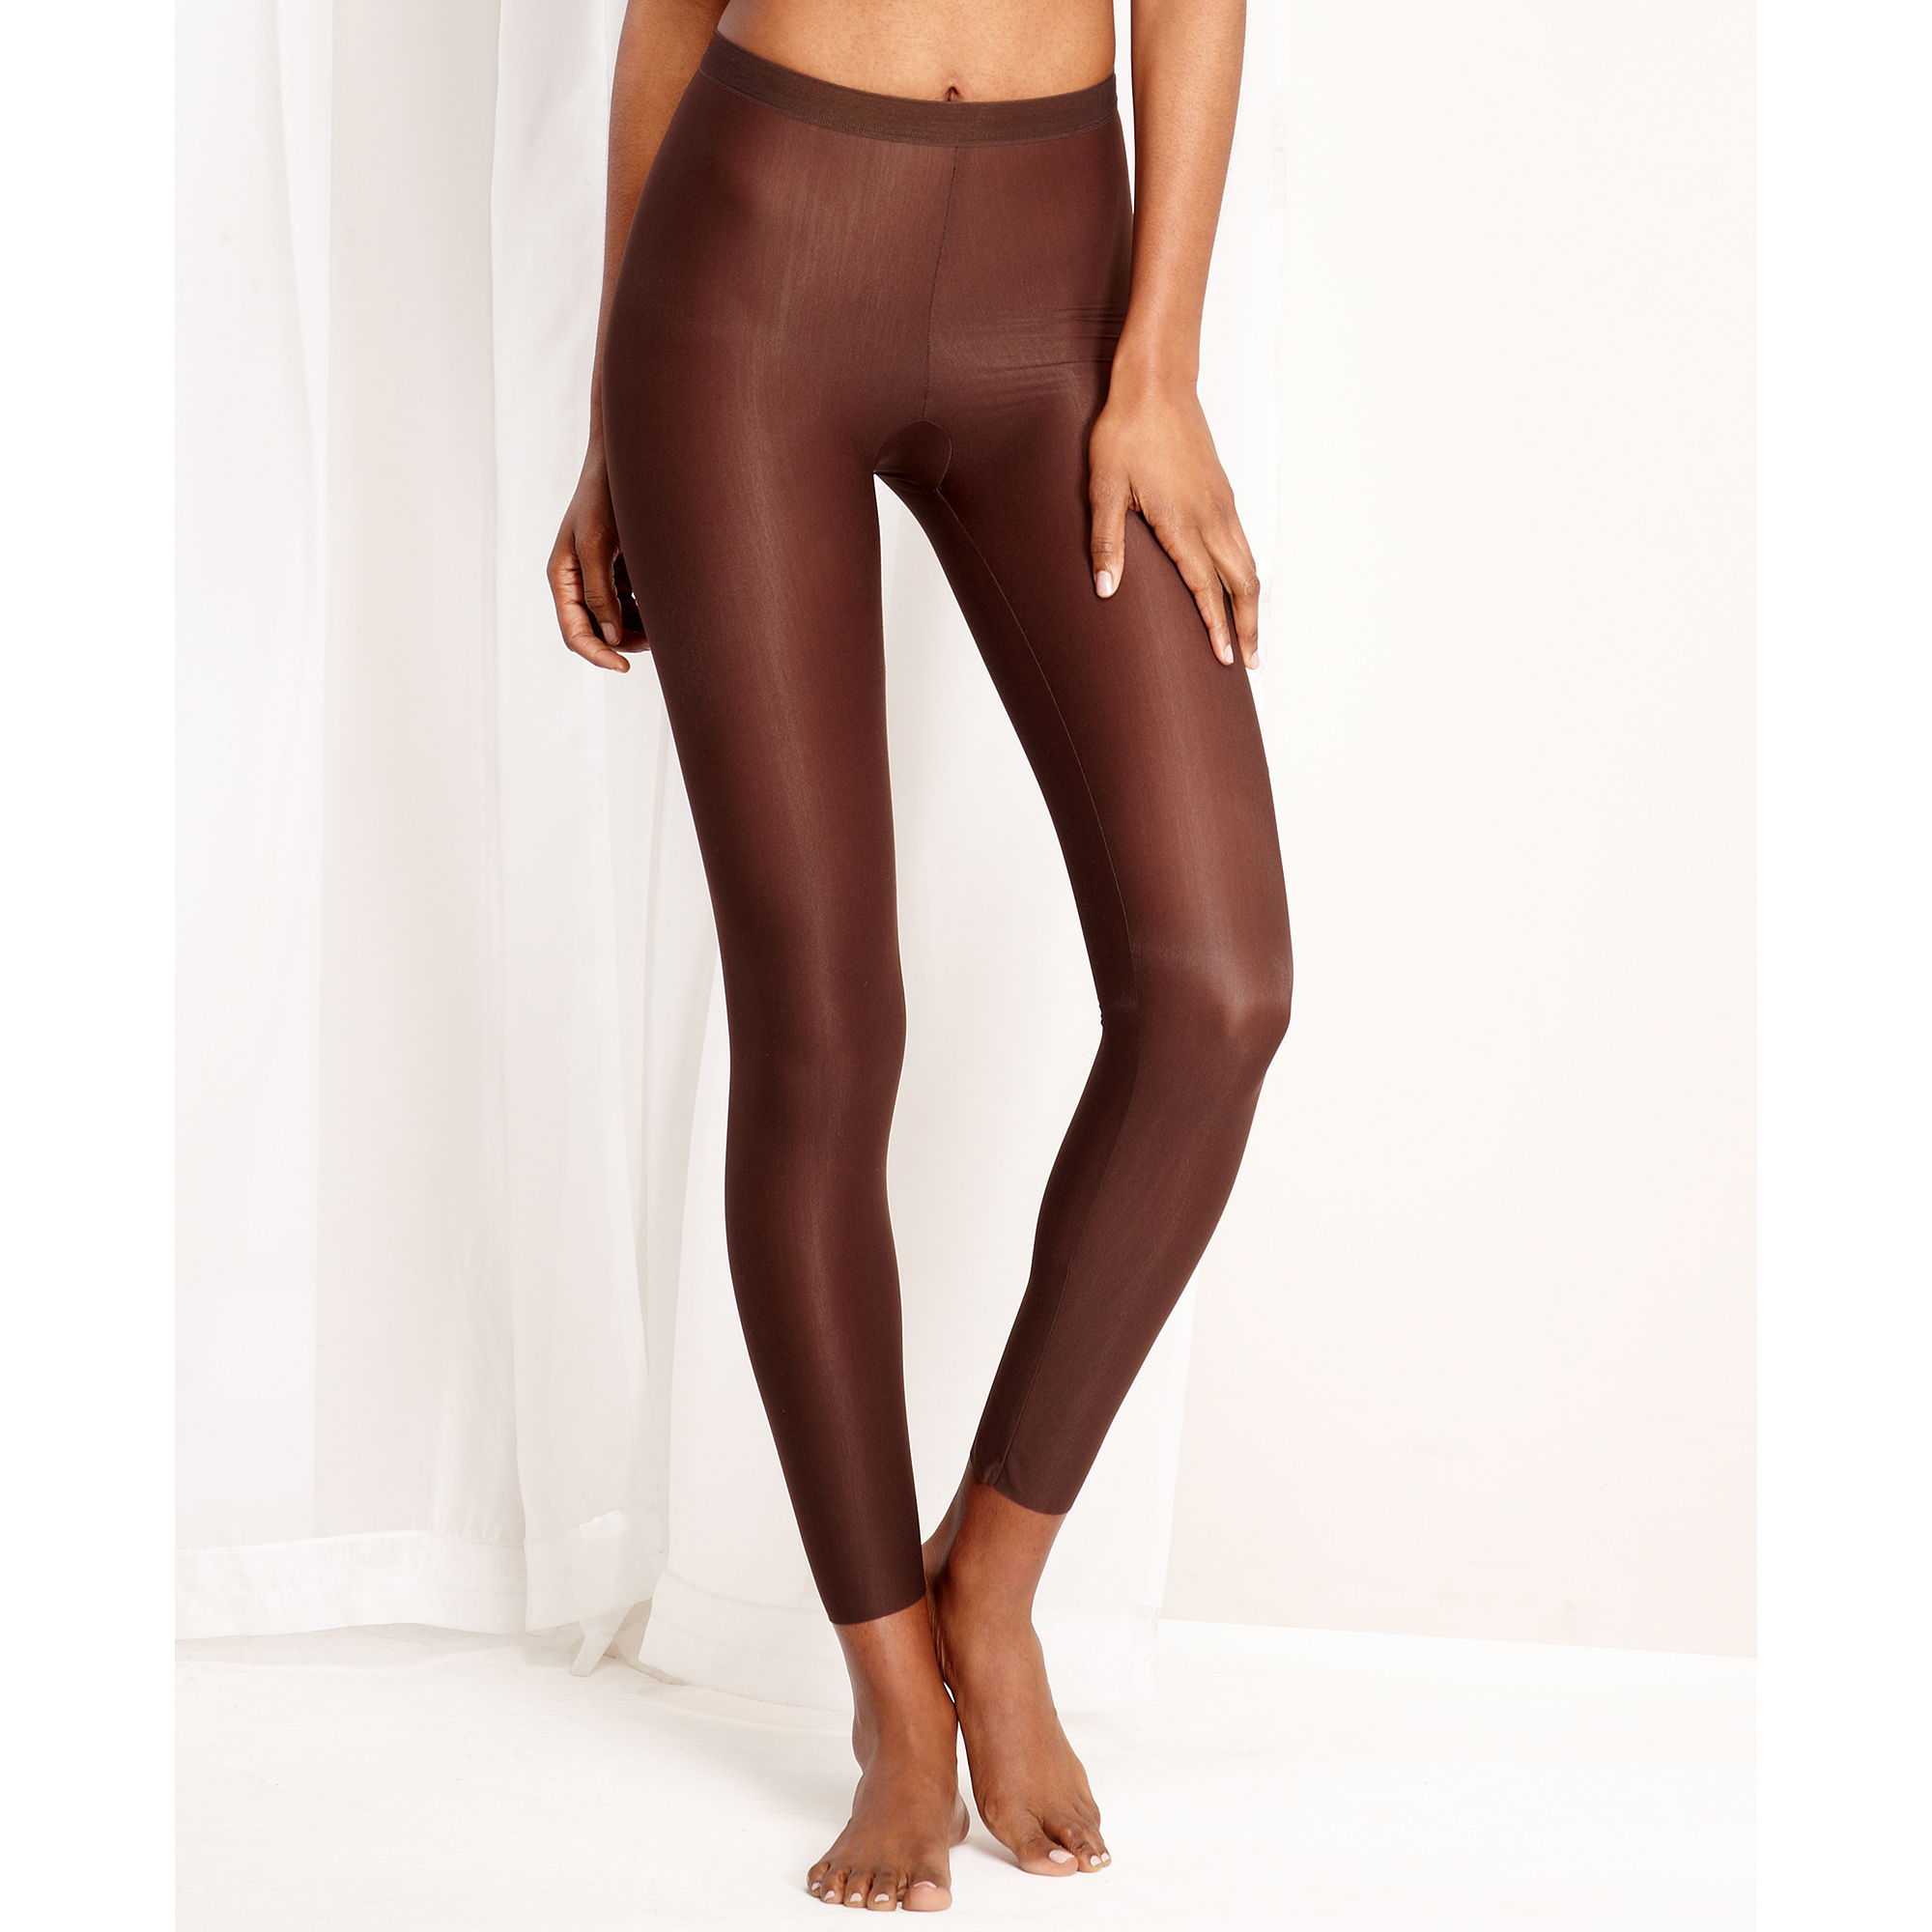 https://cdna.lystit.com/photos/2013/08/08/wacoal-naturally-nude-smooth-complexion-shapewear-leggings-product-1-12524802-785189442.jpeg